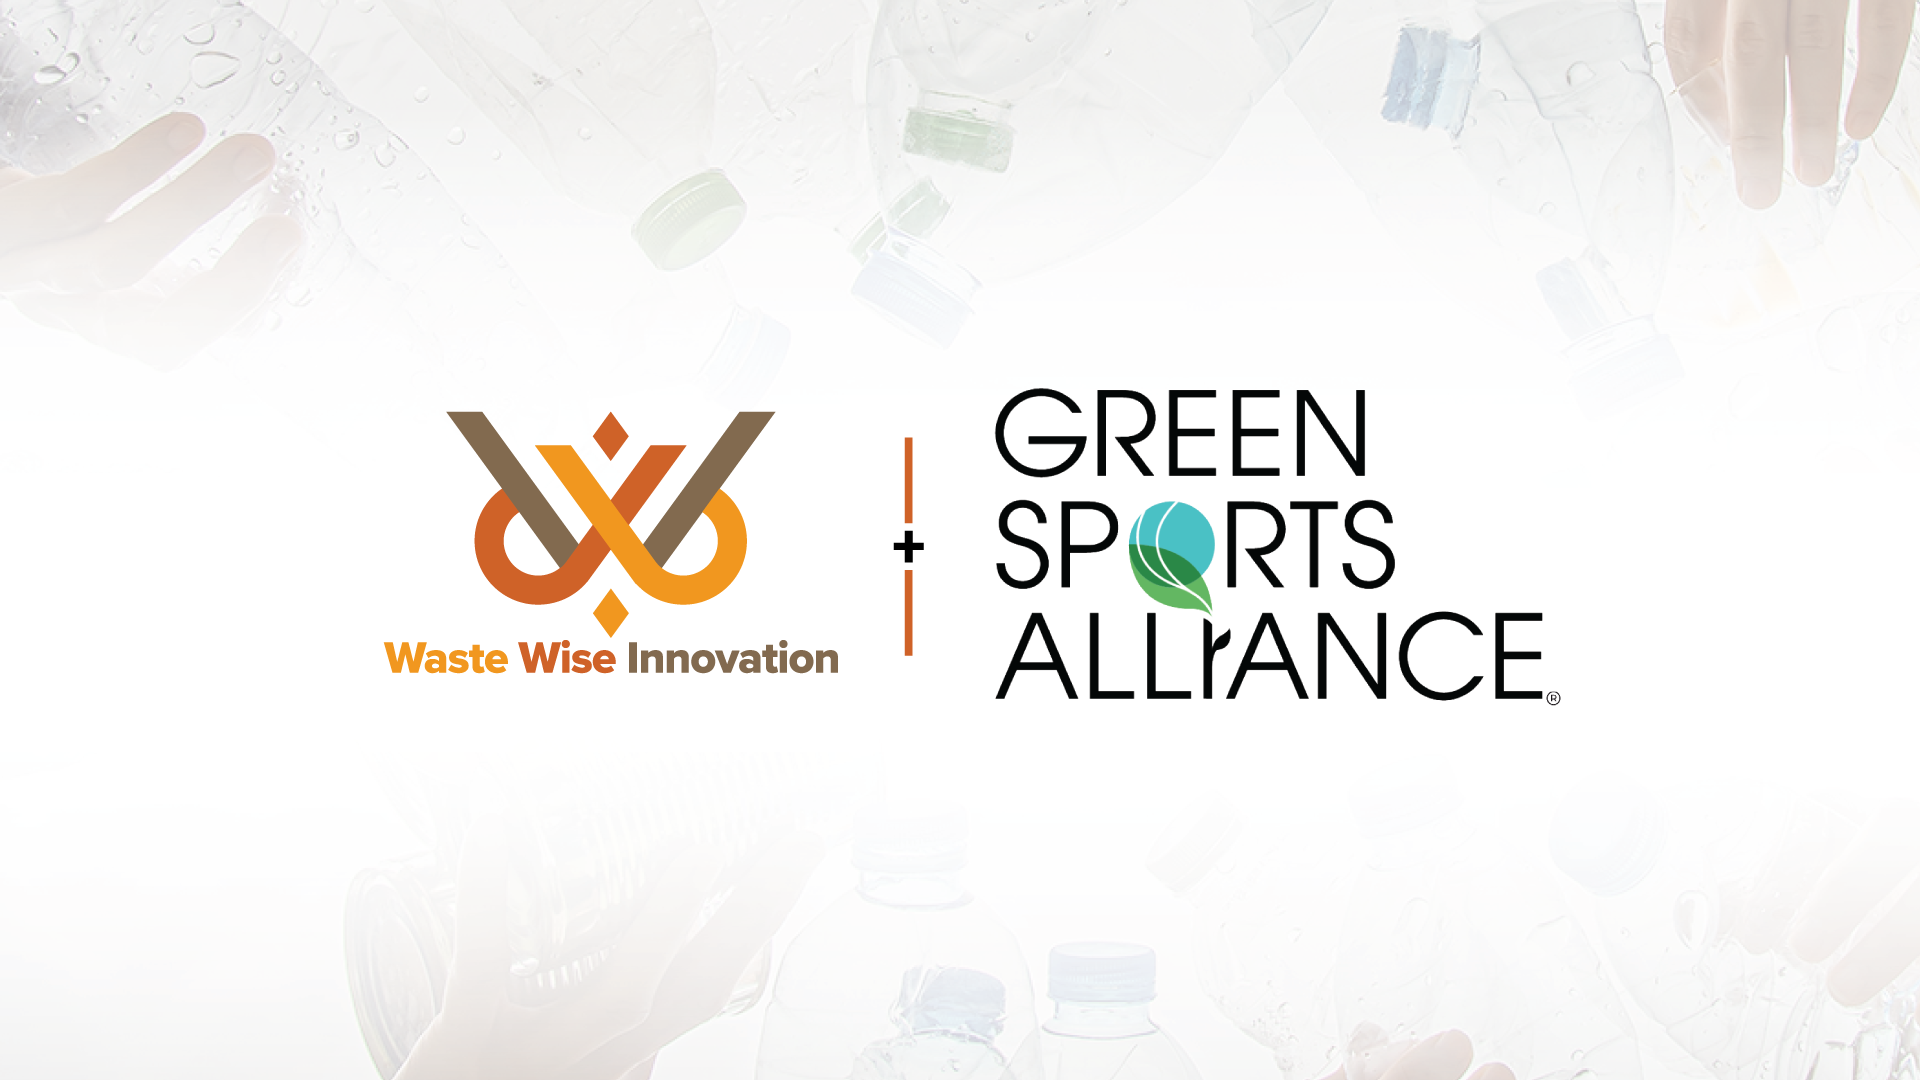 WWI Green Sports Alliance Announcement Blog